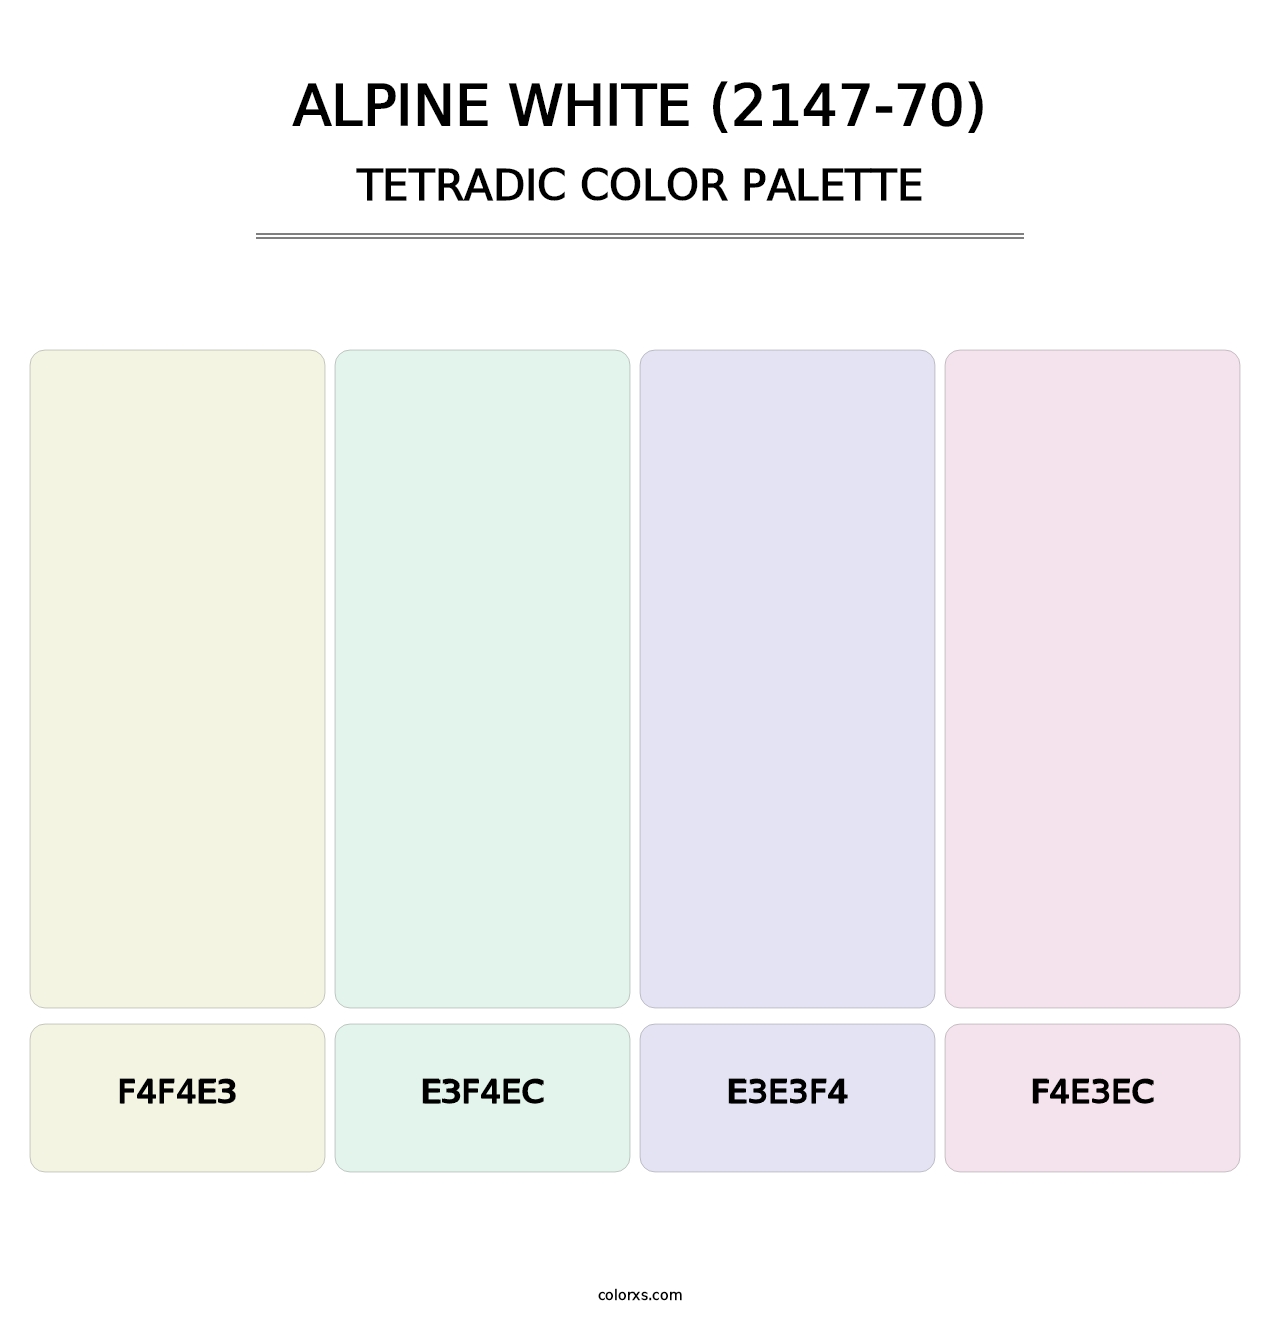 Alpine White (2147-70) - Tetradic Color Palette